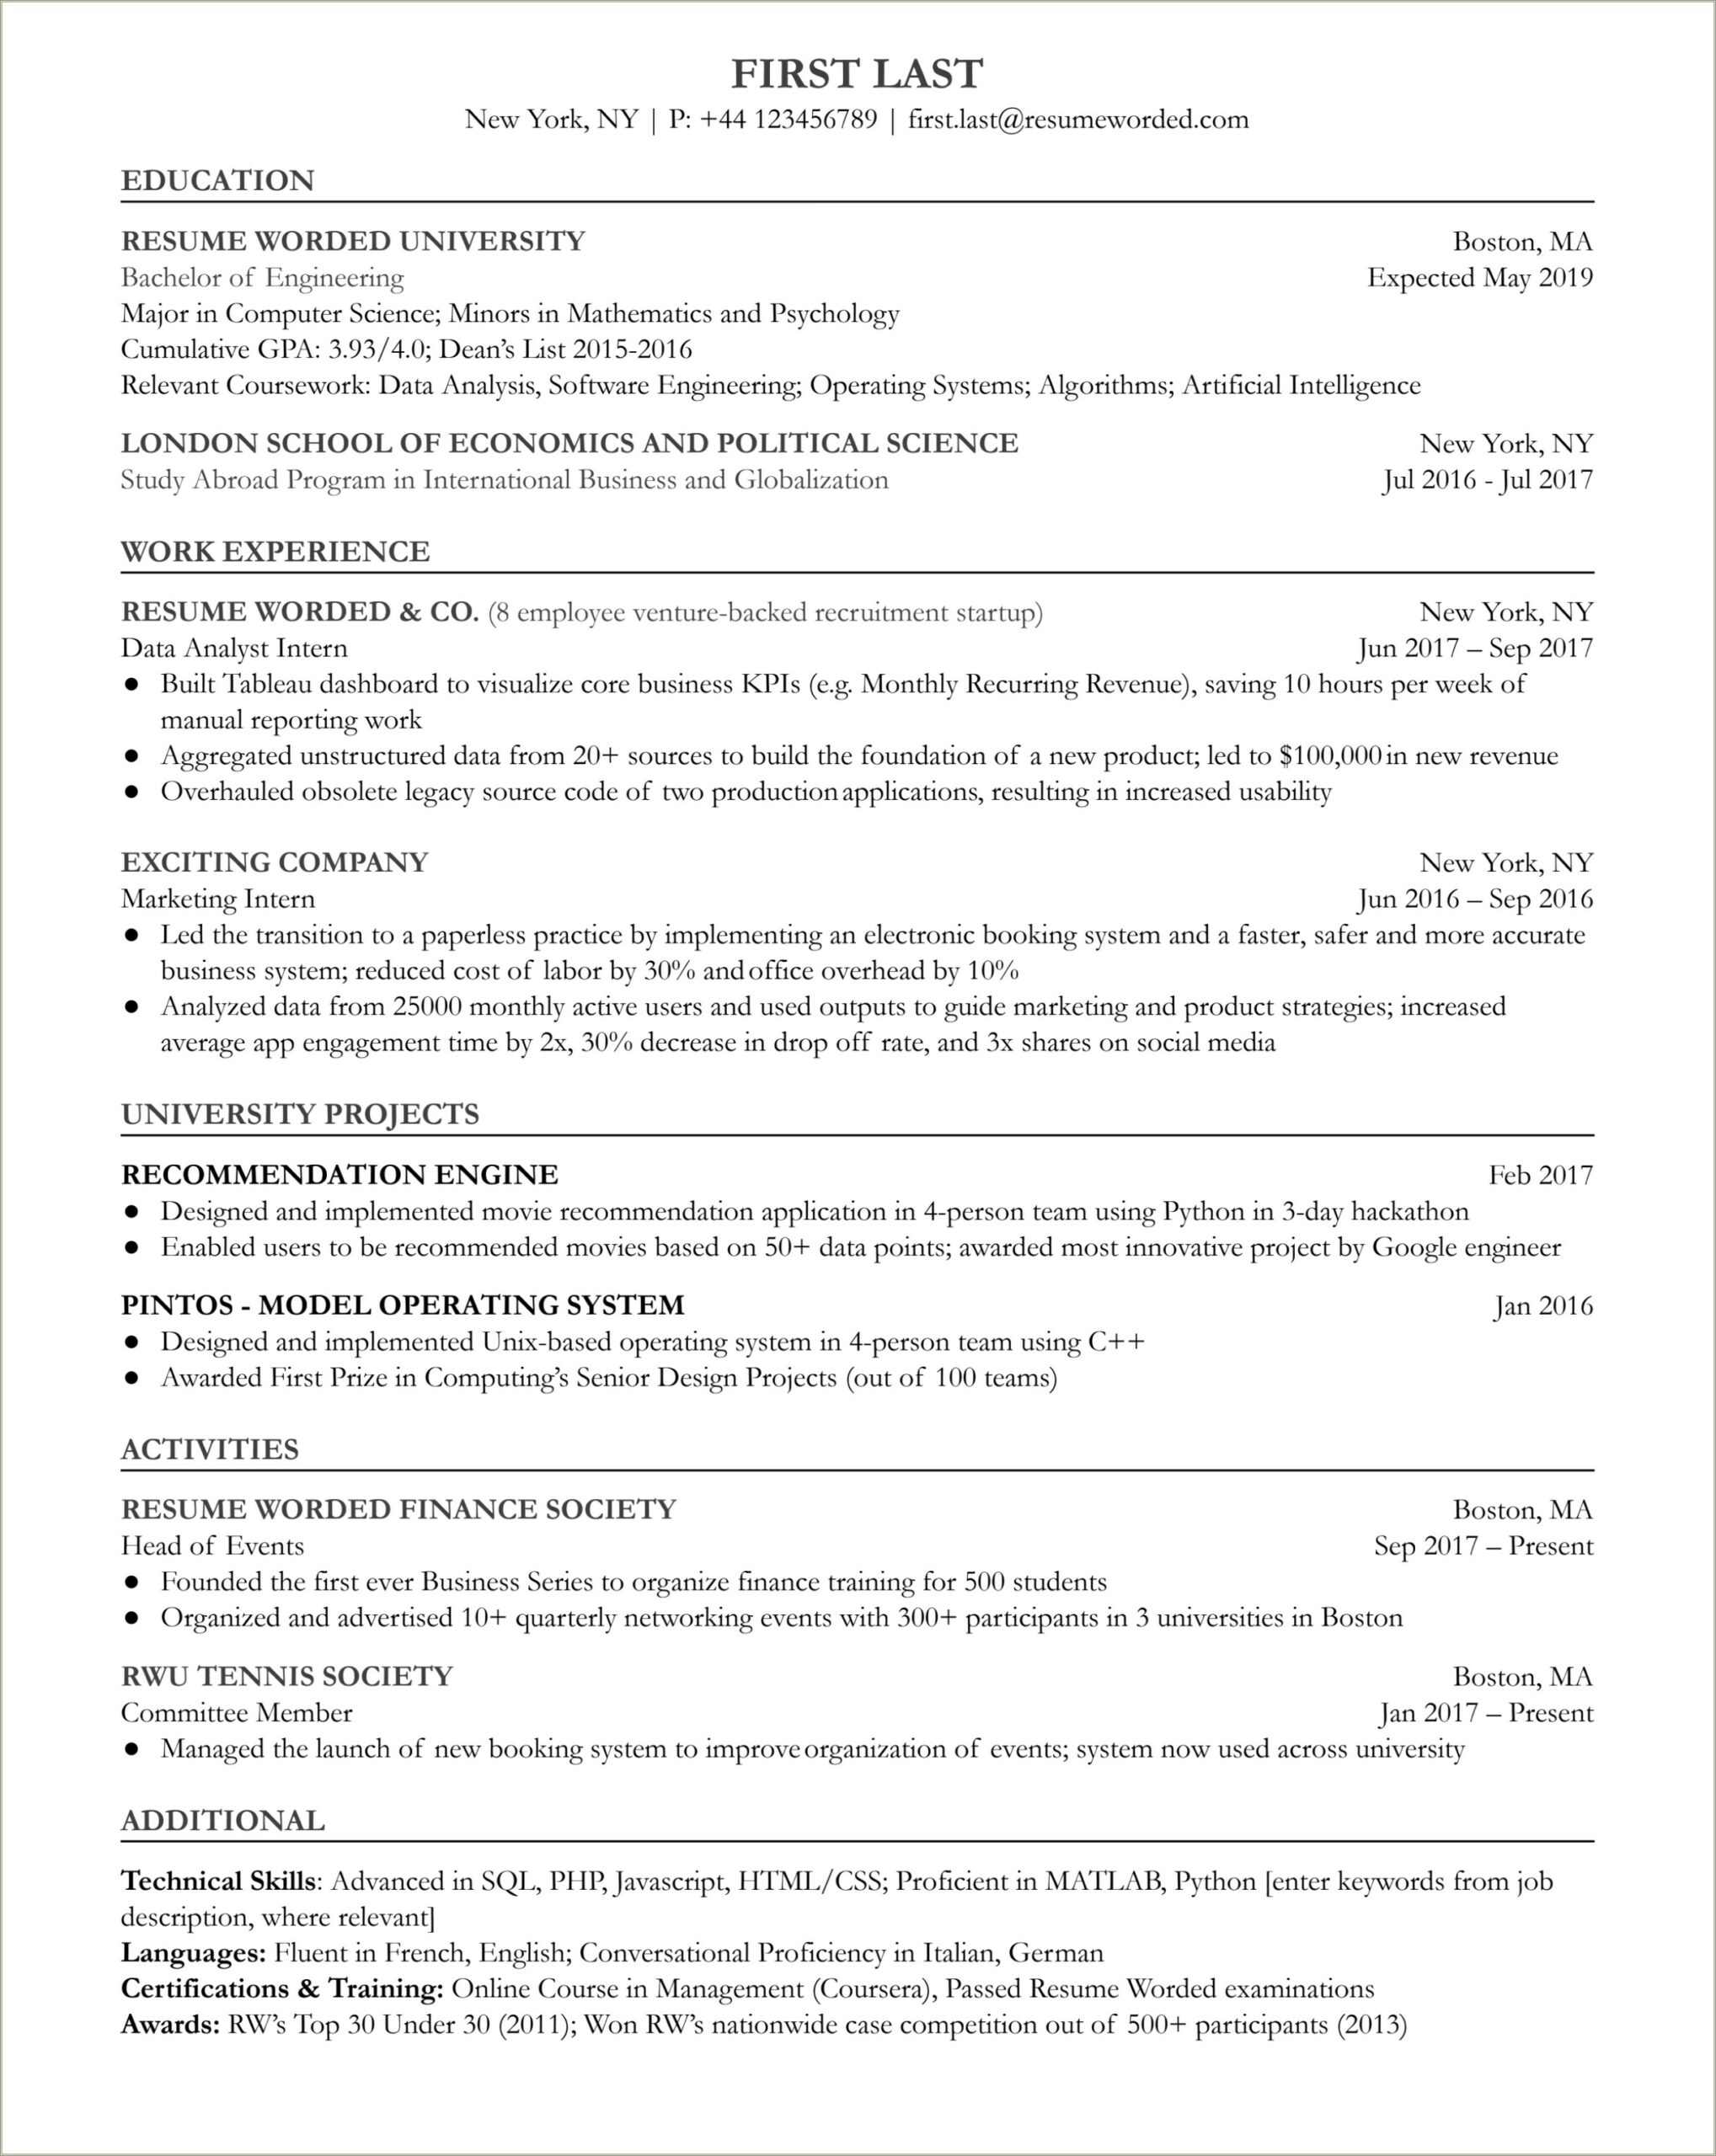 Resume Summary Of Skills Data Analyst